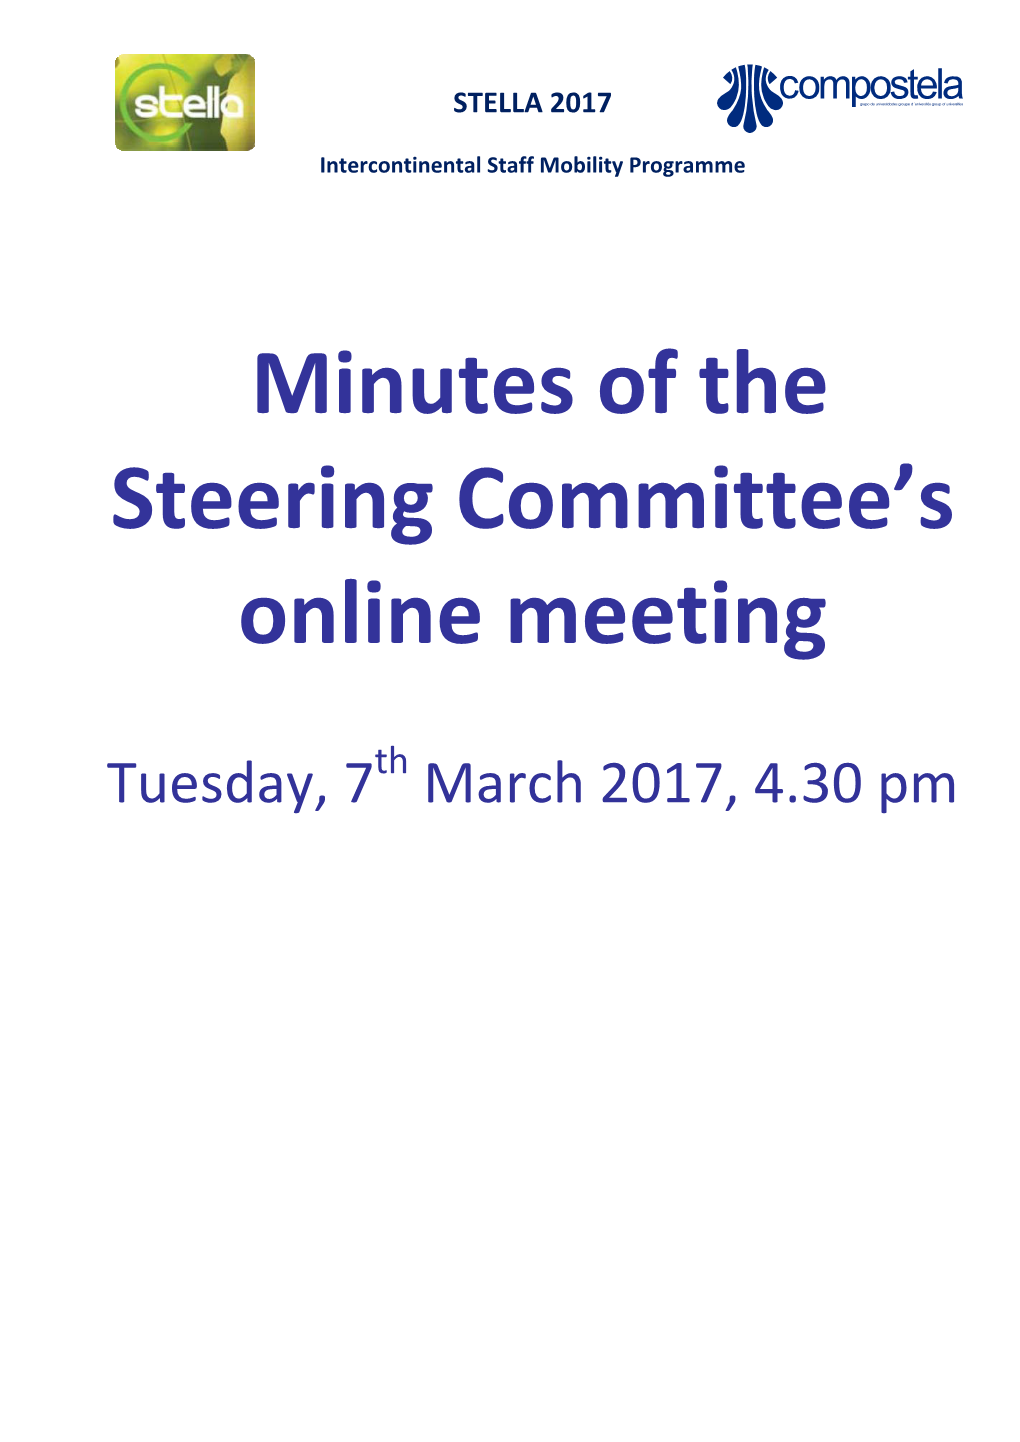 Minutes of the Steering Committee's Online Meeting